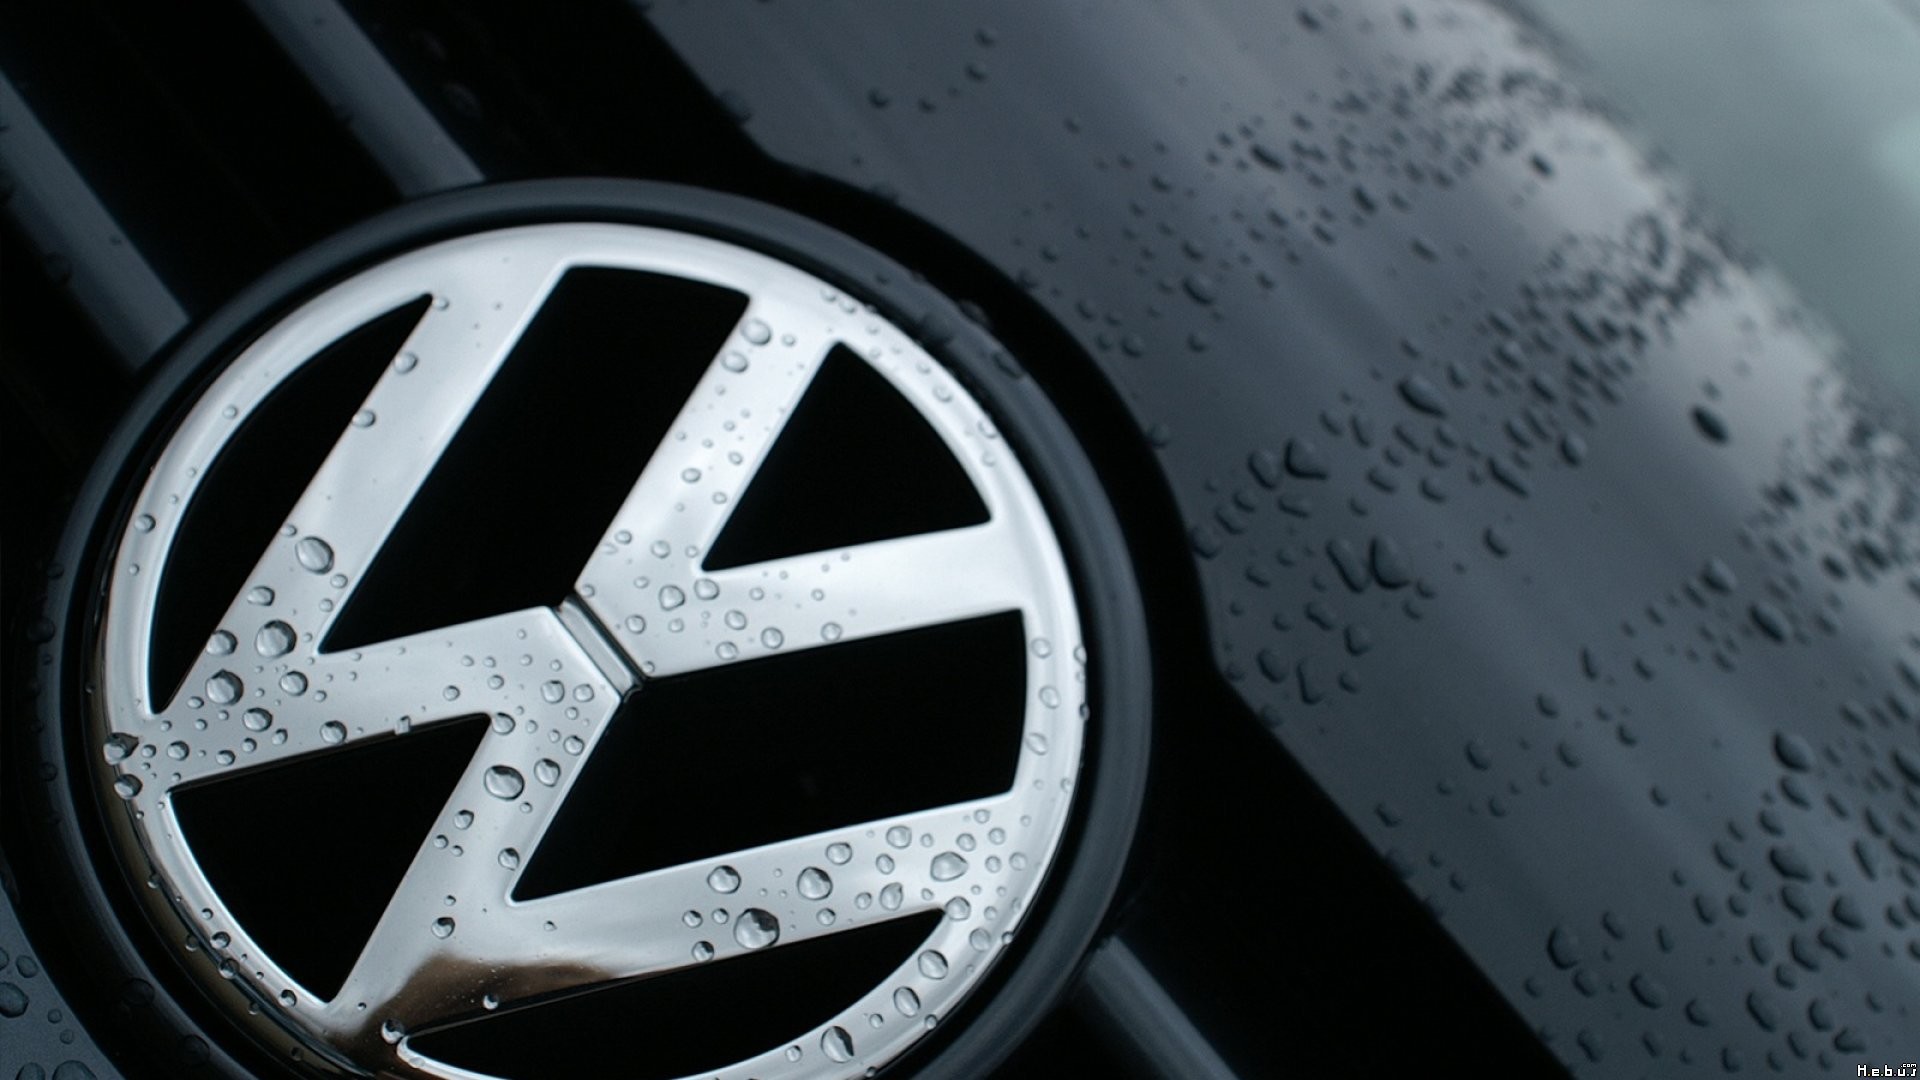 1920x1080 Volkswagen Logo Wallpapers 2013 - Vdub News.com